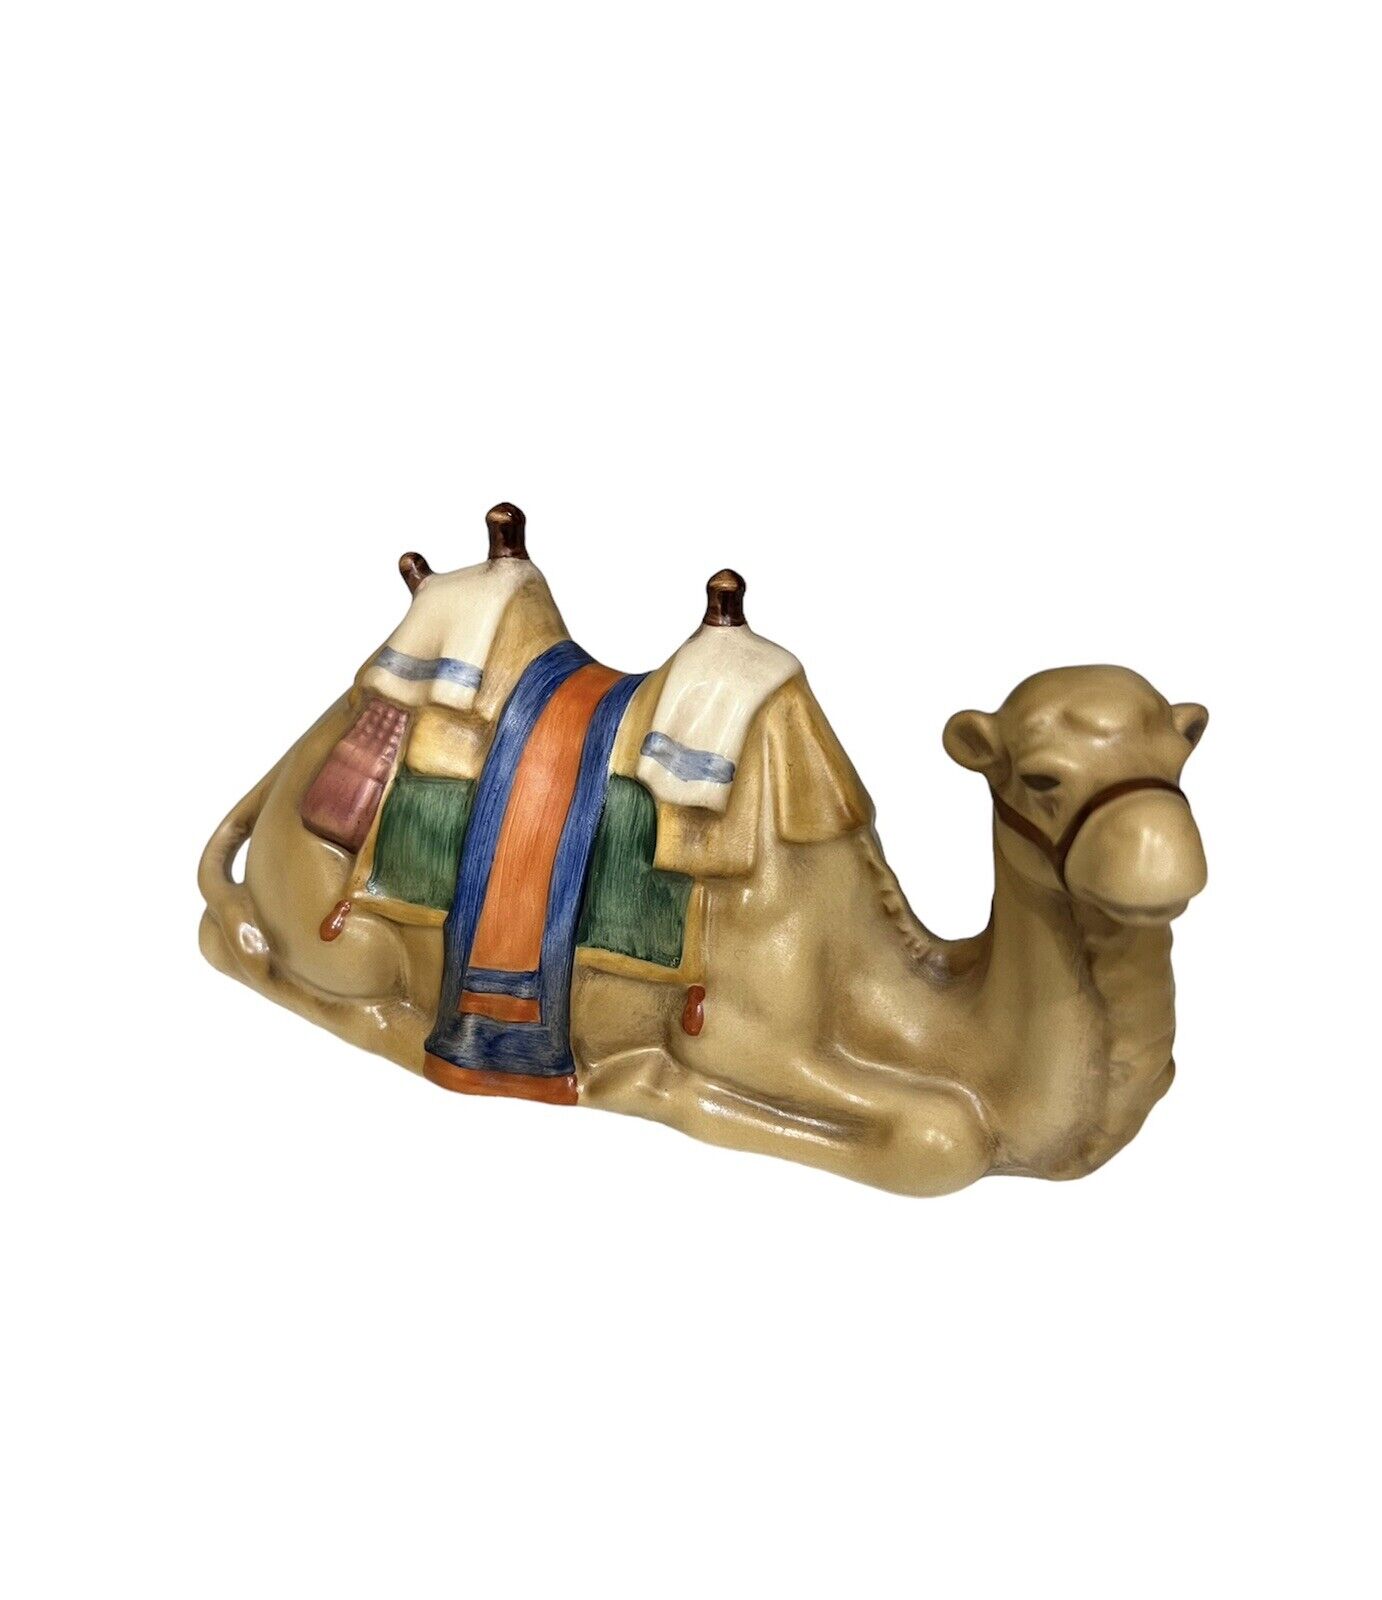 Vintage Goebel Hummel Camel Nativity Scene Laying Down With Box